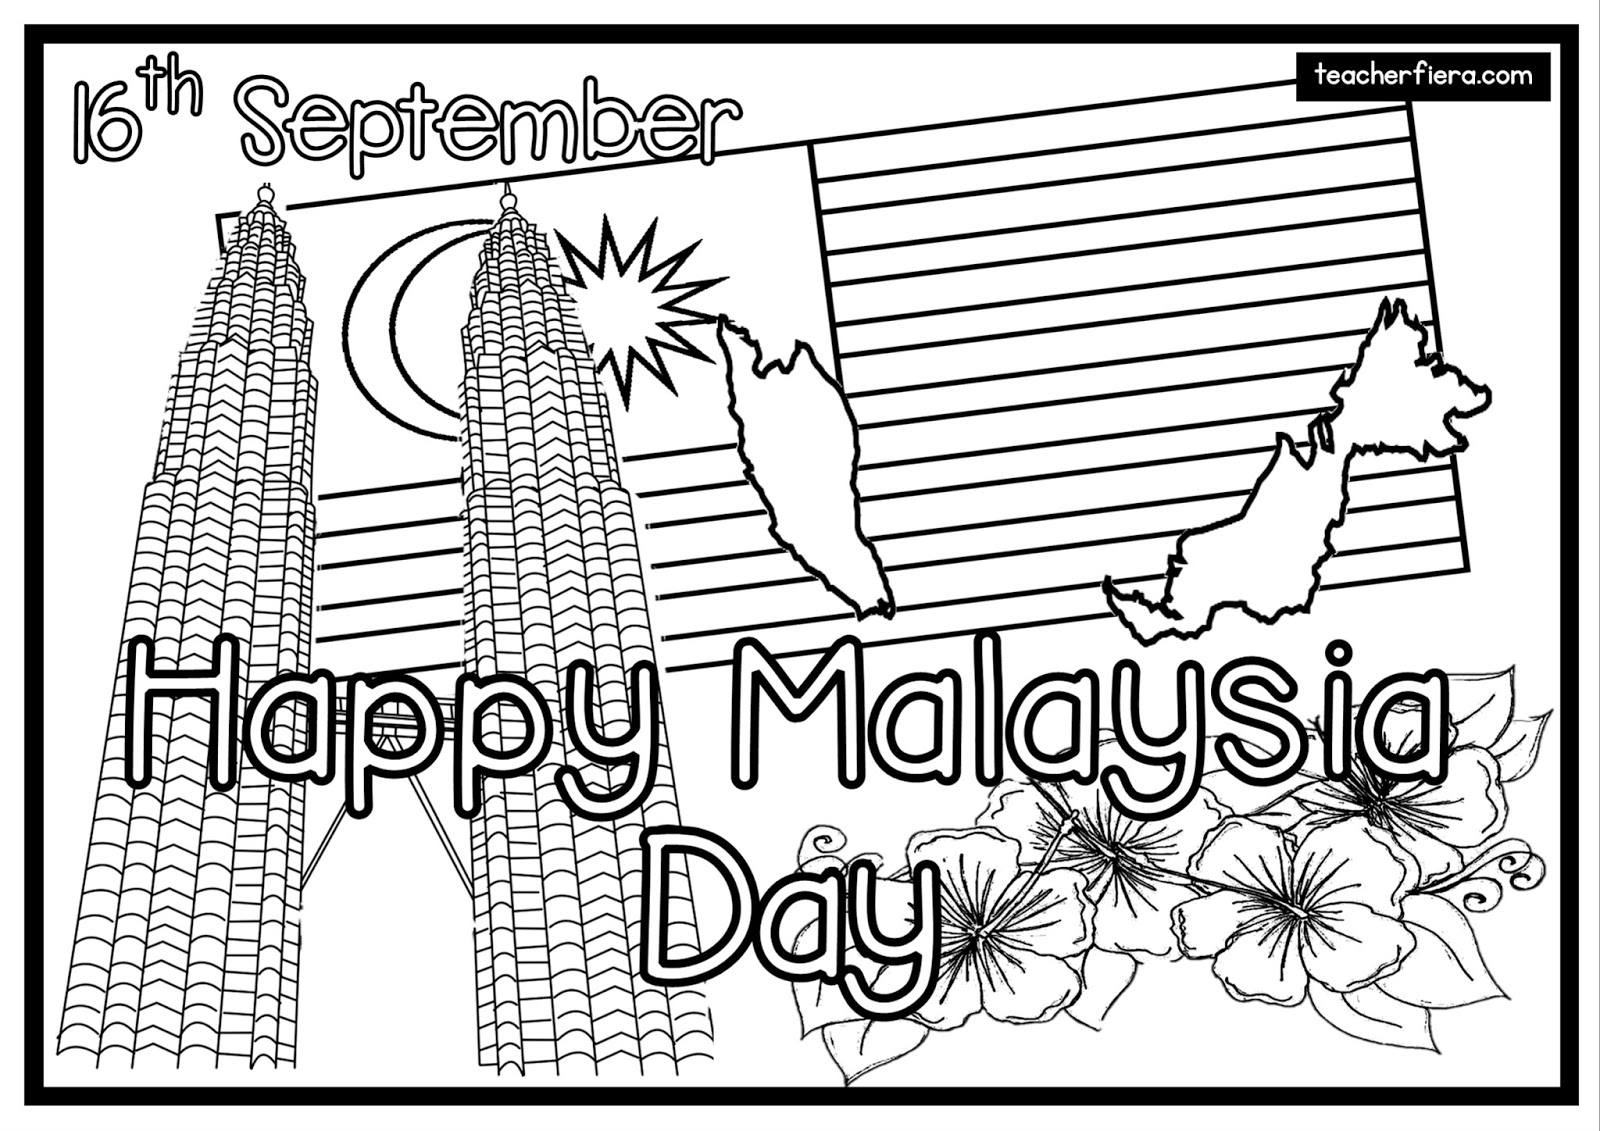 teacherfiera.com: HAPPY MALAYSIA DAY 16TH SEPTEMBER ...